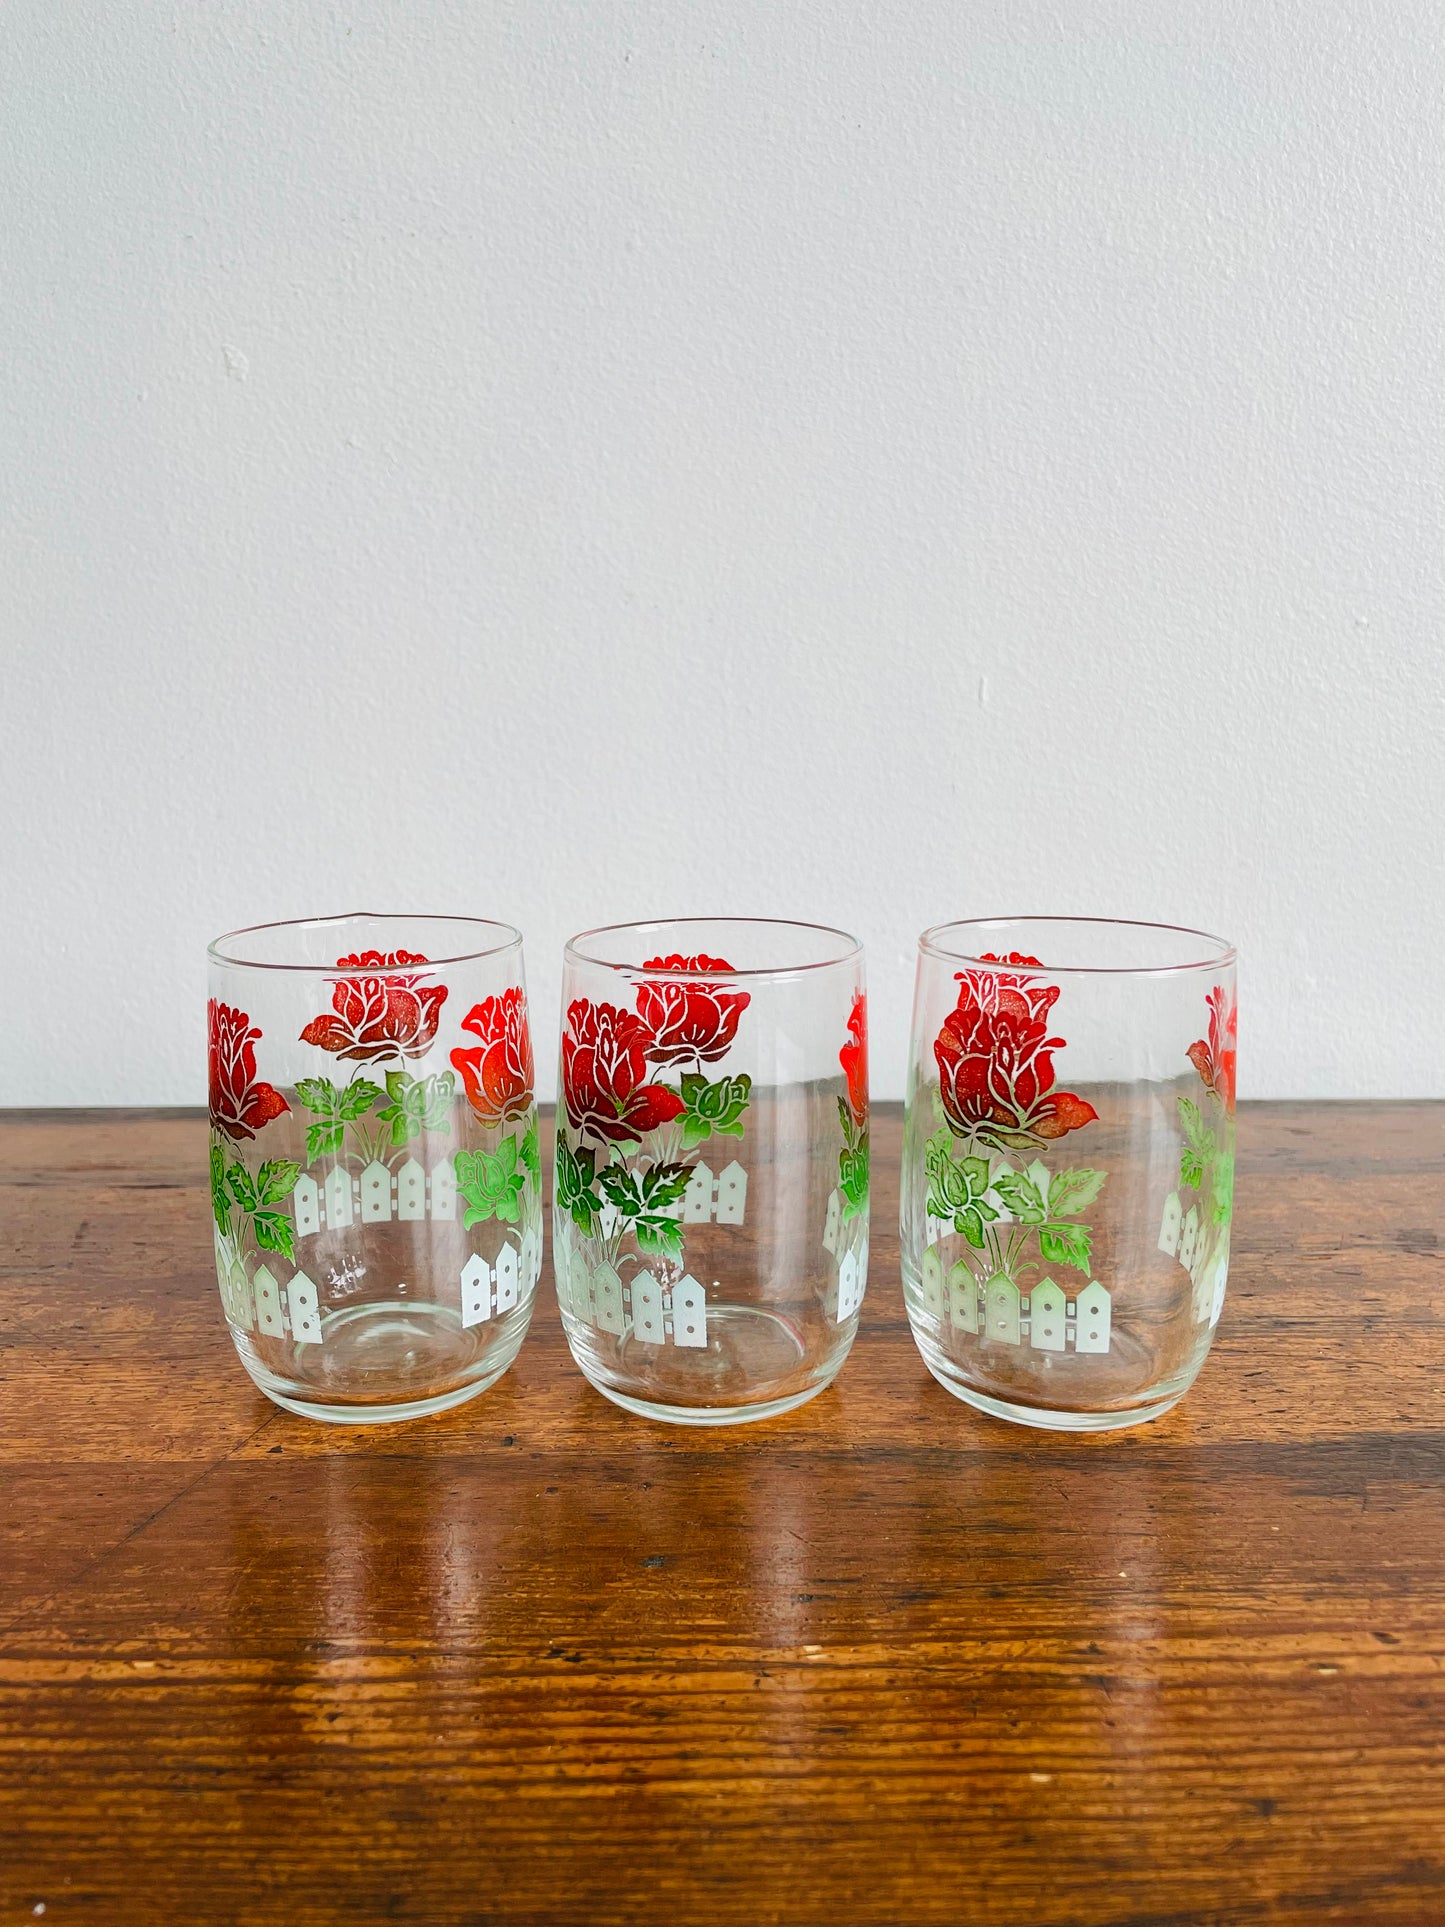 Juice Glasses with Rose Garden & White Picket Fence Design - Set of 3